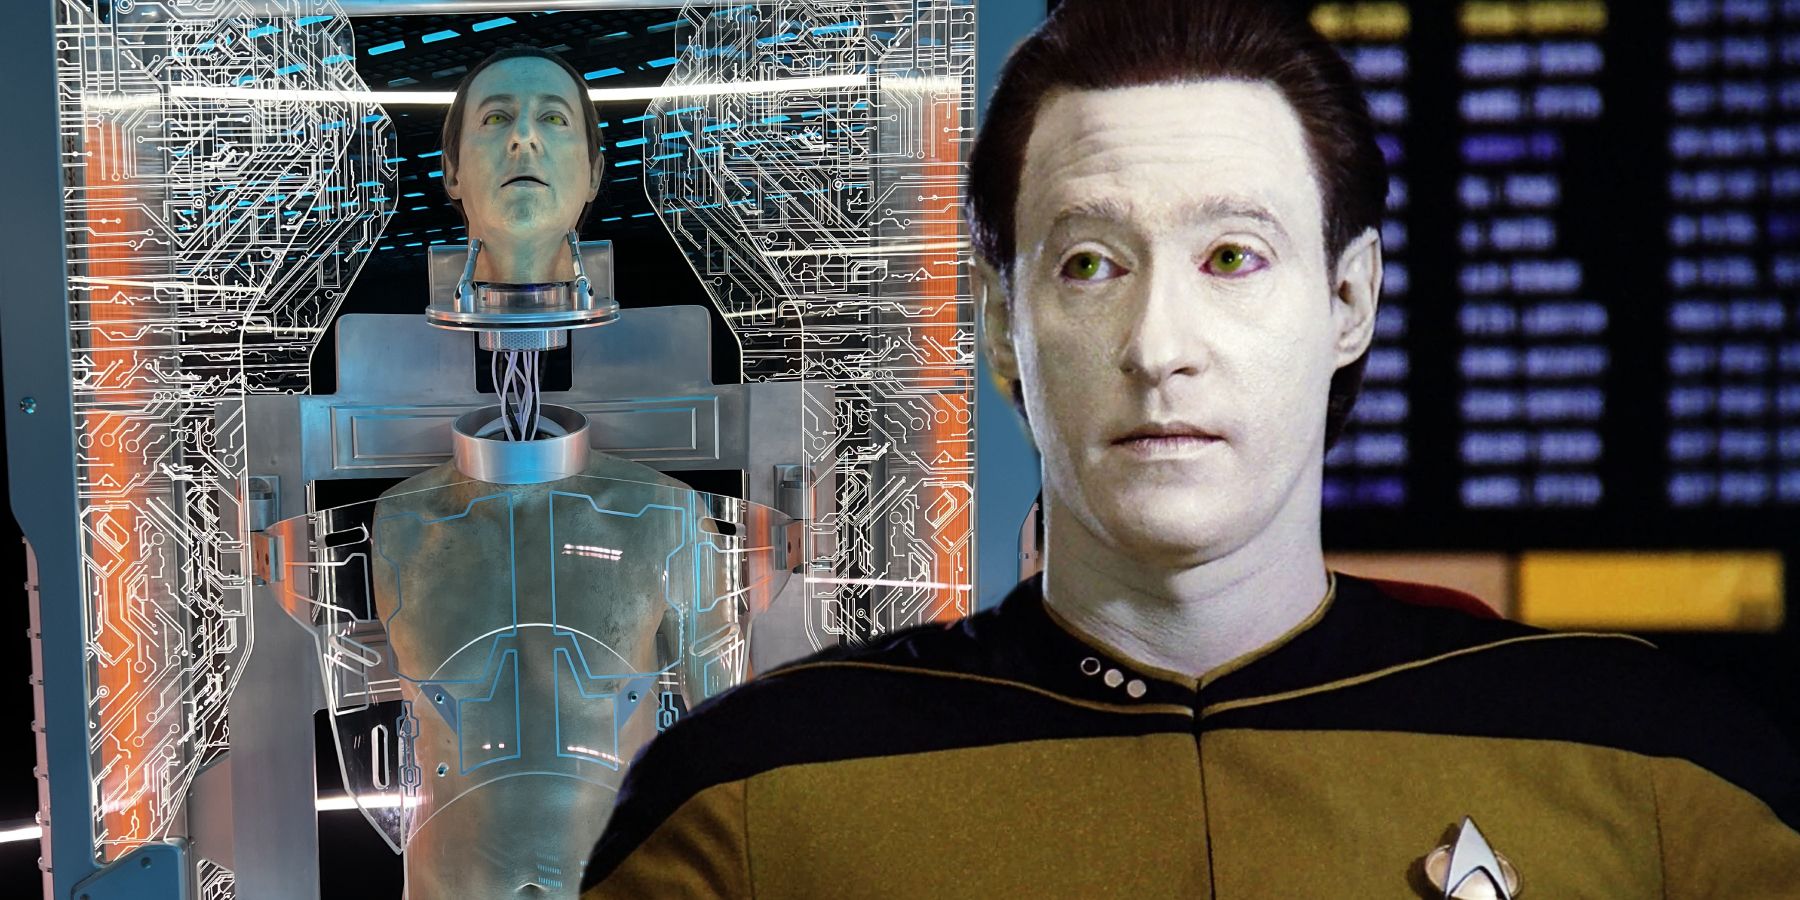 B-4 disassembled and Data in Star Trek: Picard and Star Trek: TNG